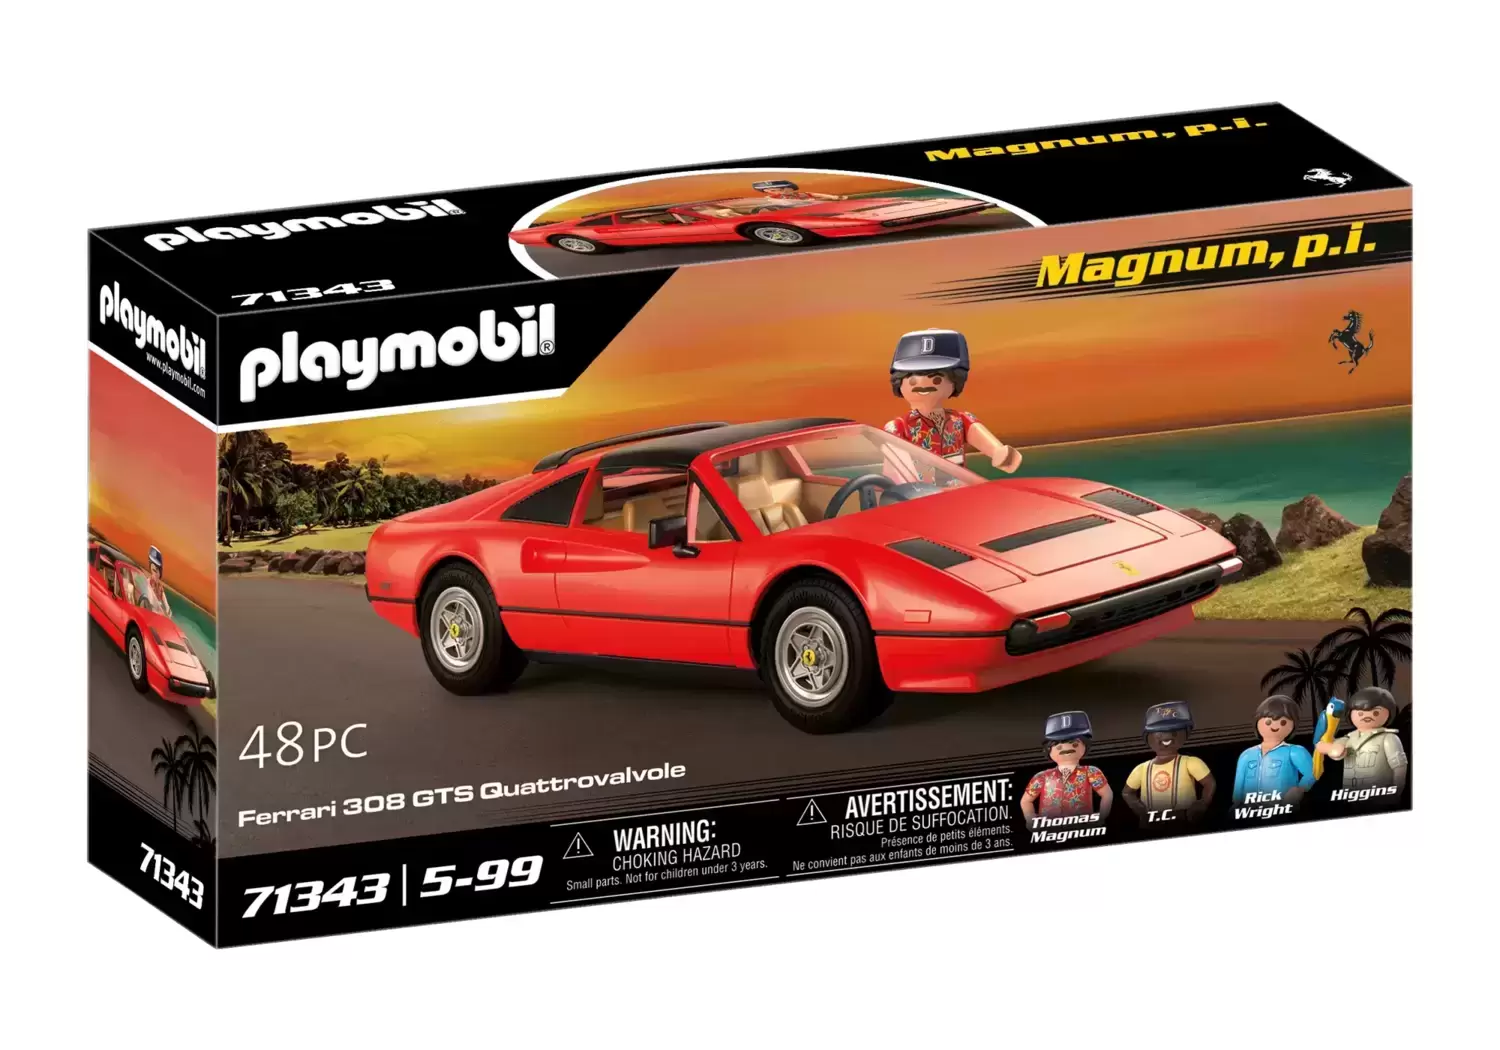 Playmobil Classic Cars - Magnum, P.I. - Ferrari 308 GTS Quattrovalvole